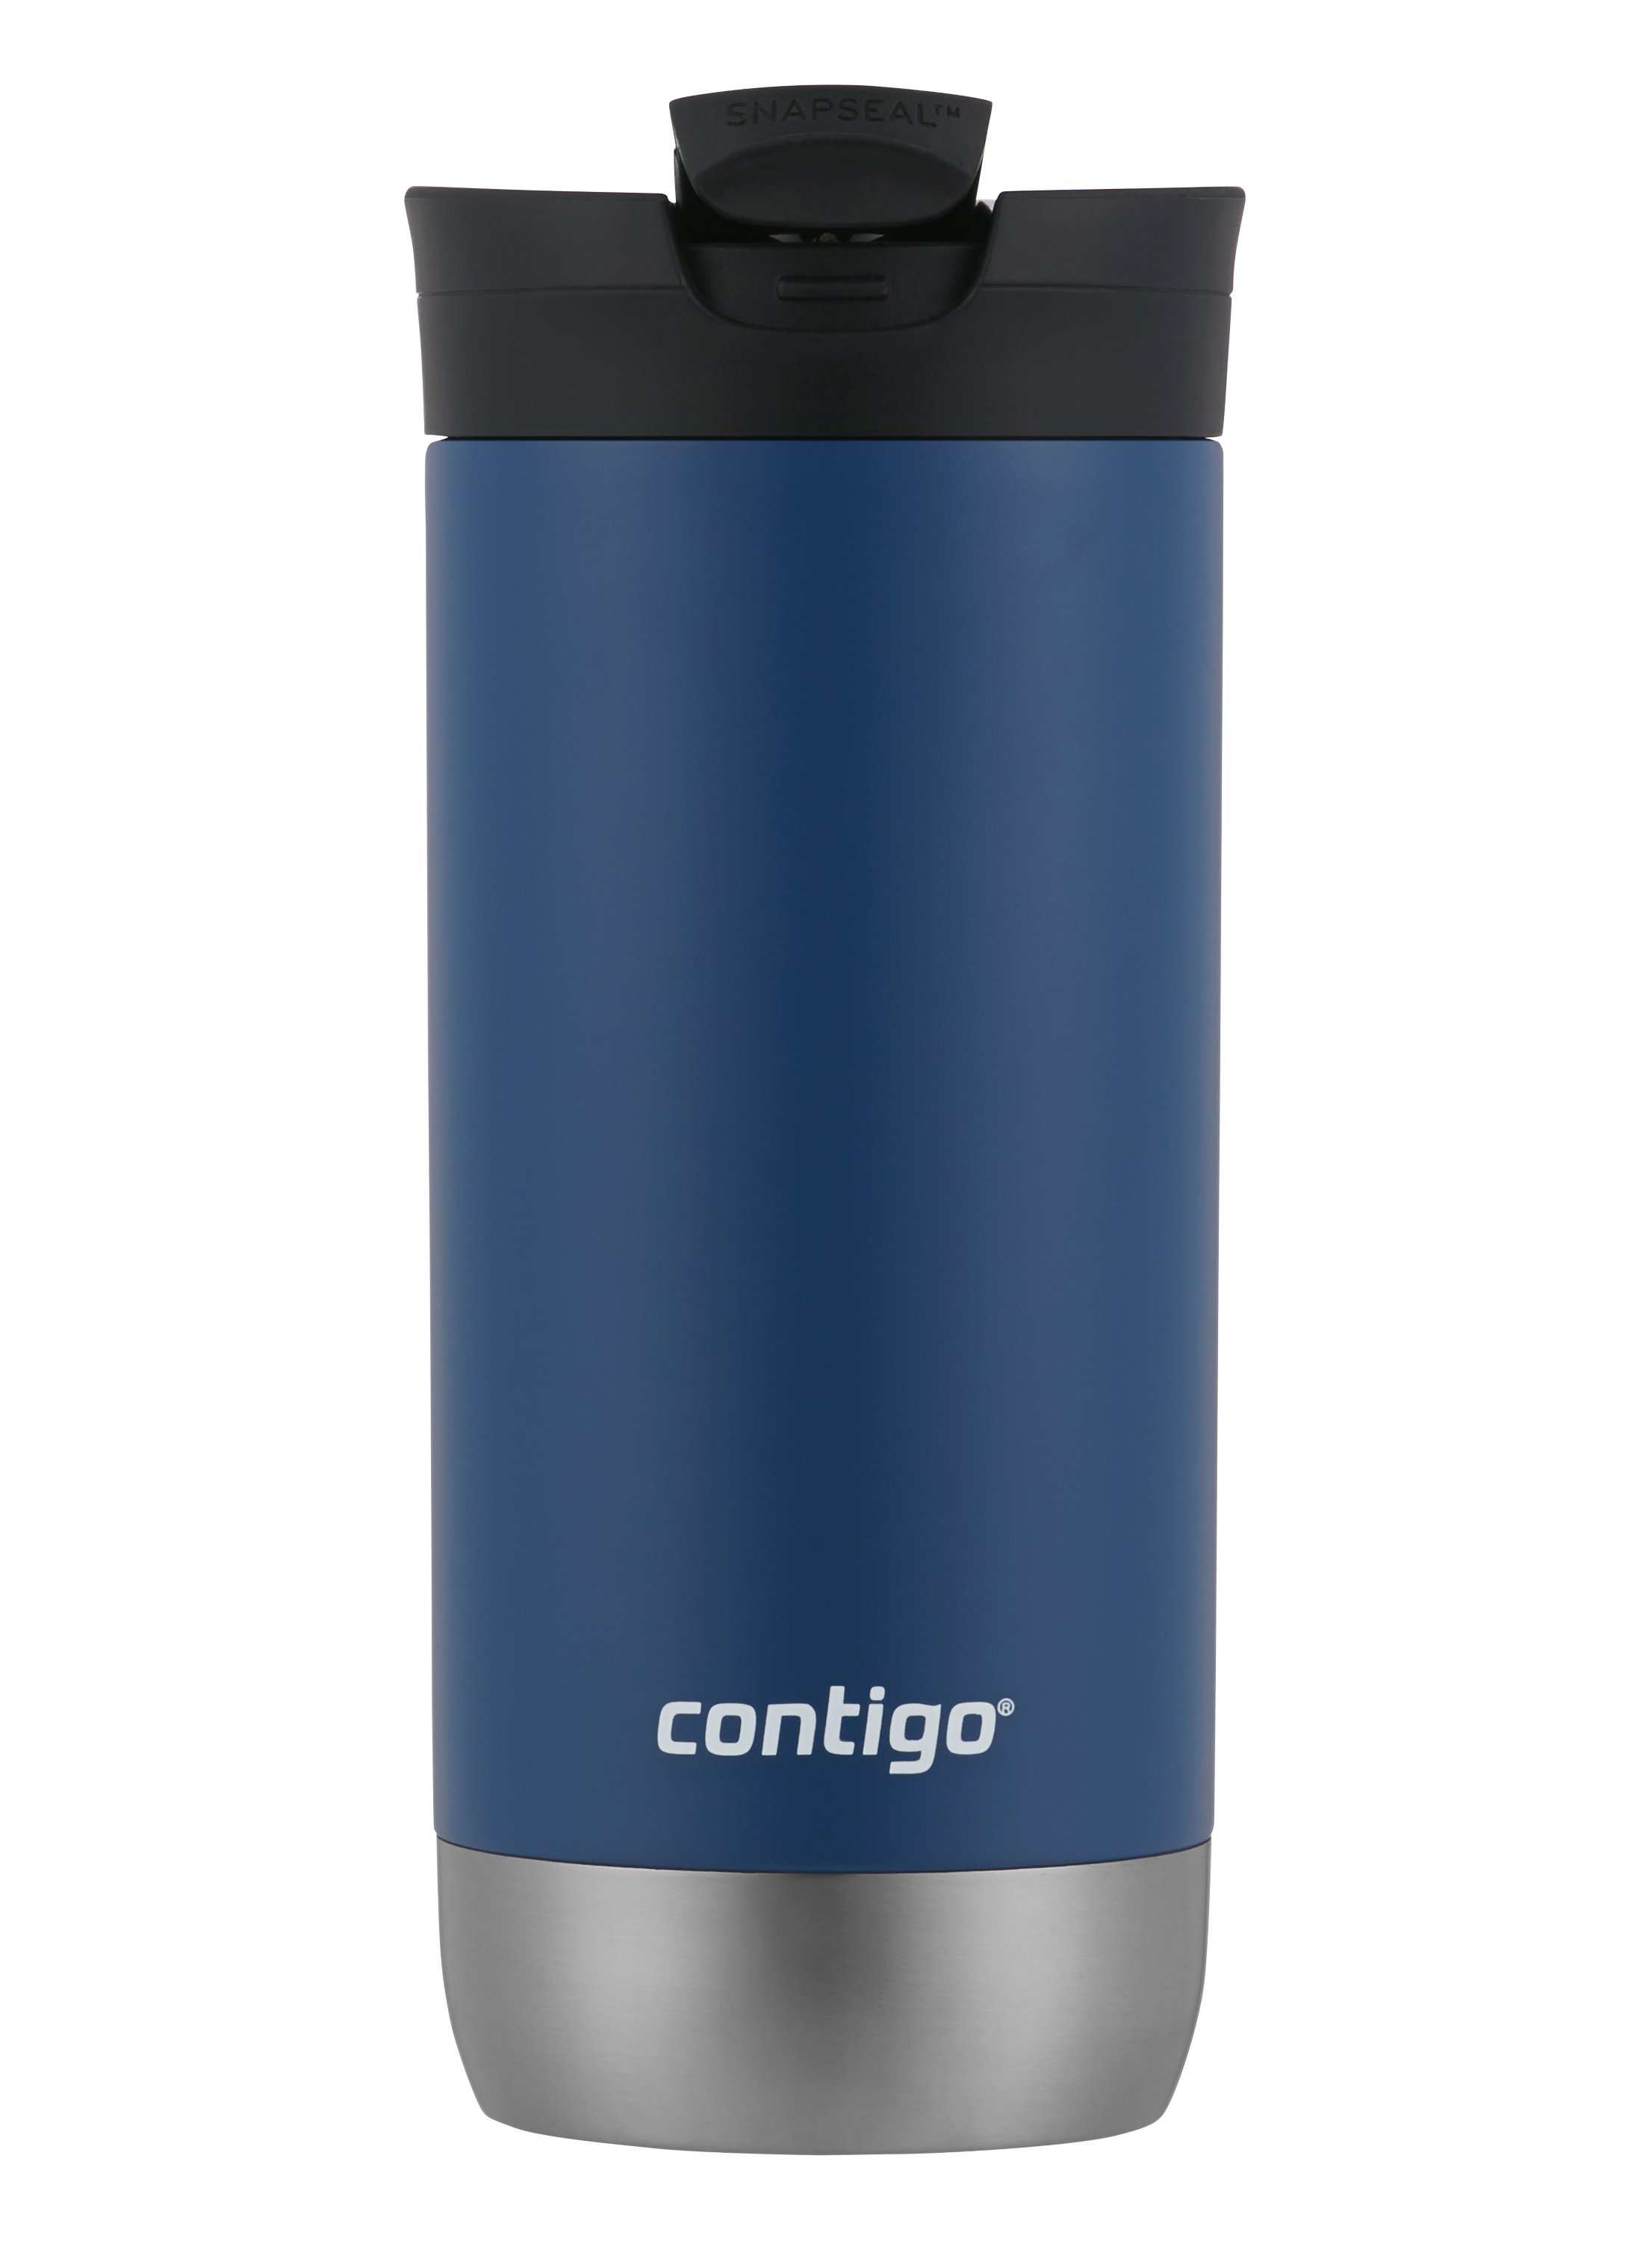 Contigo Huron SnapSeal Vacuum Insulated Leak-Proof Travel Mug 16